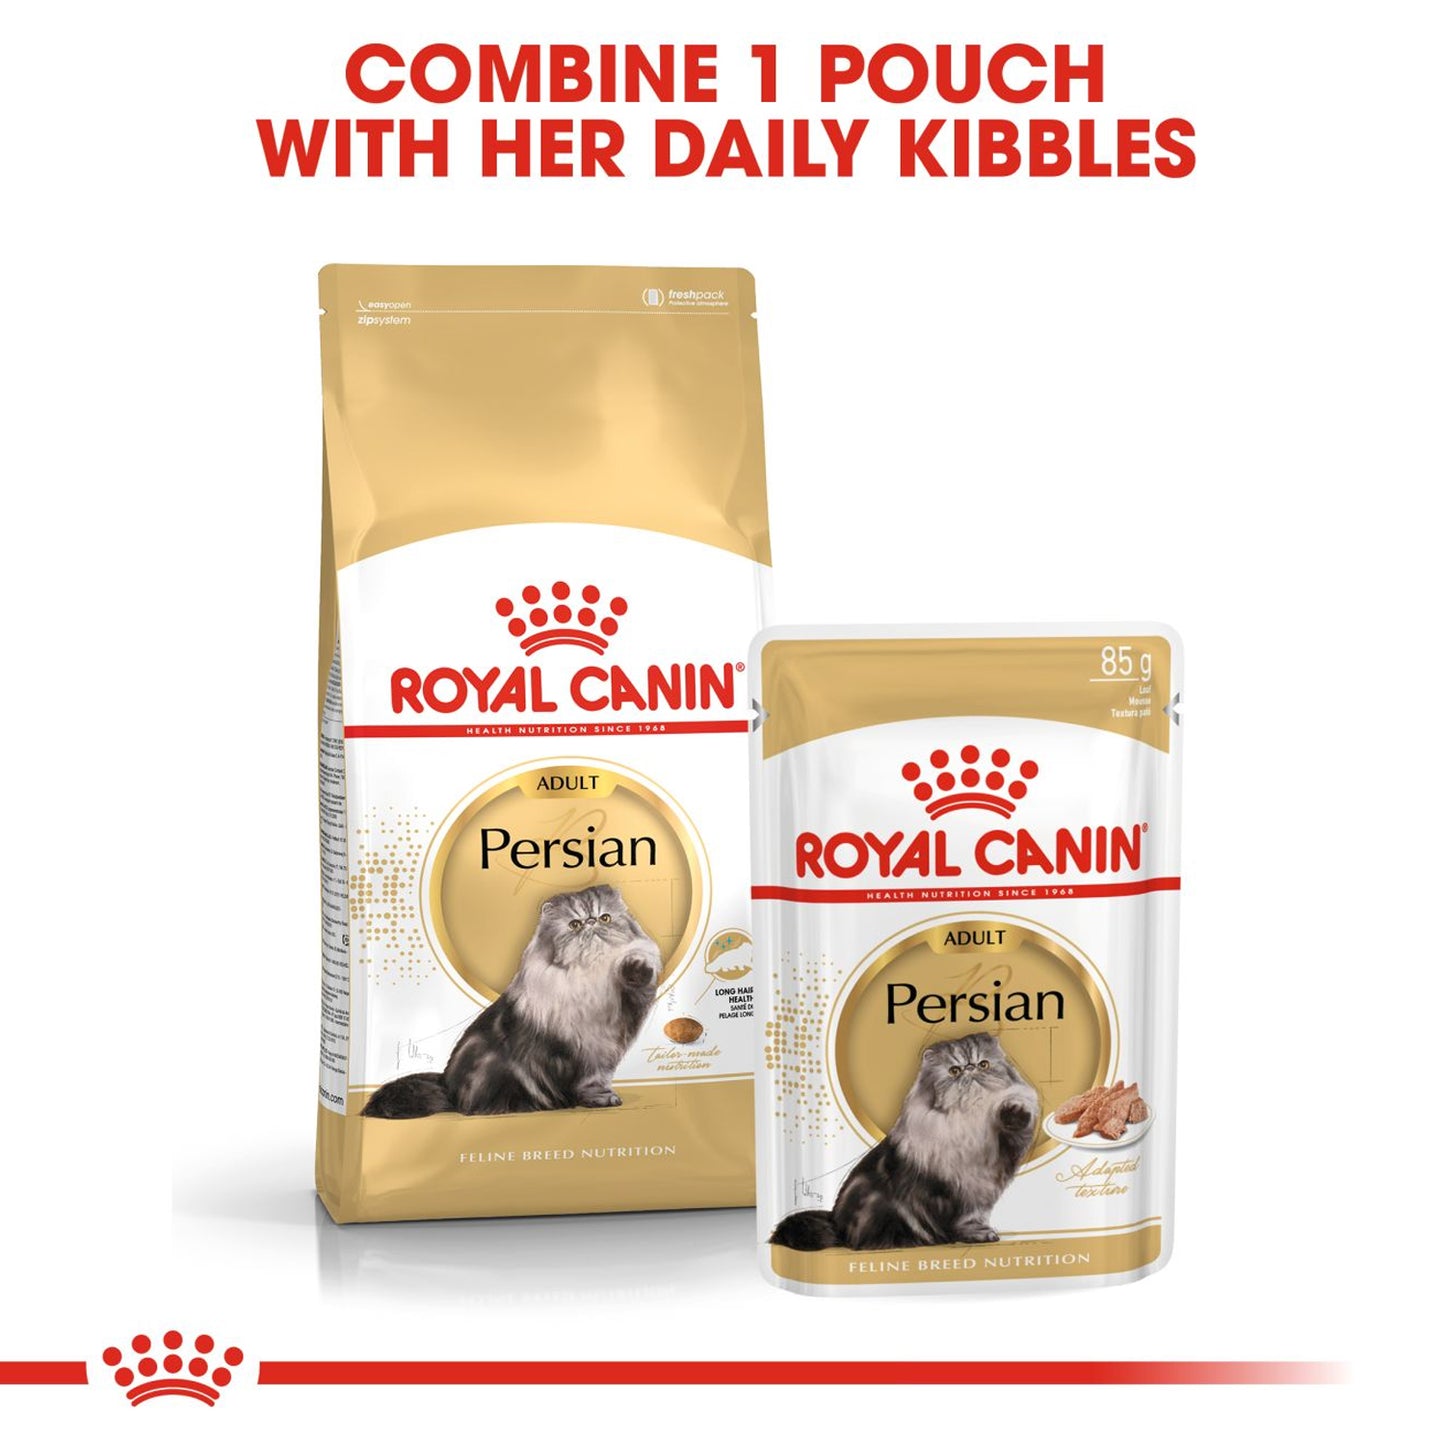 Royal Canin - Persian Adult Wet Cat Food